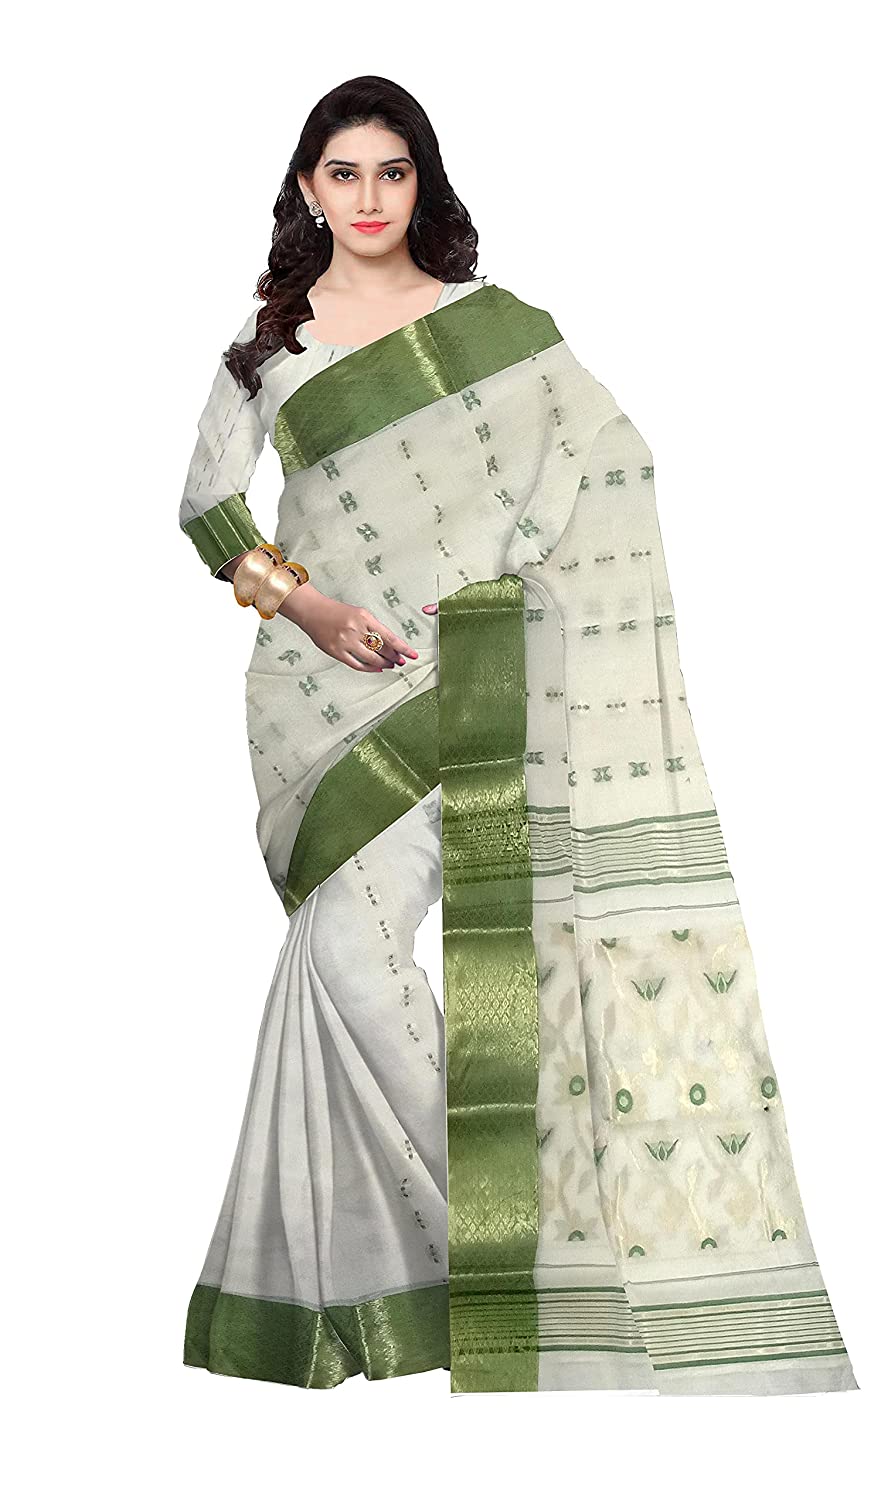 Pradip Fabrics Ethnic Women's Tant Cotton White color Saree